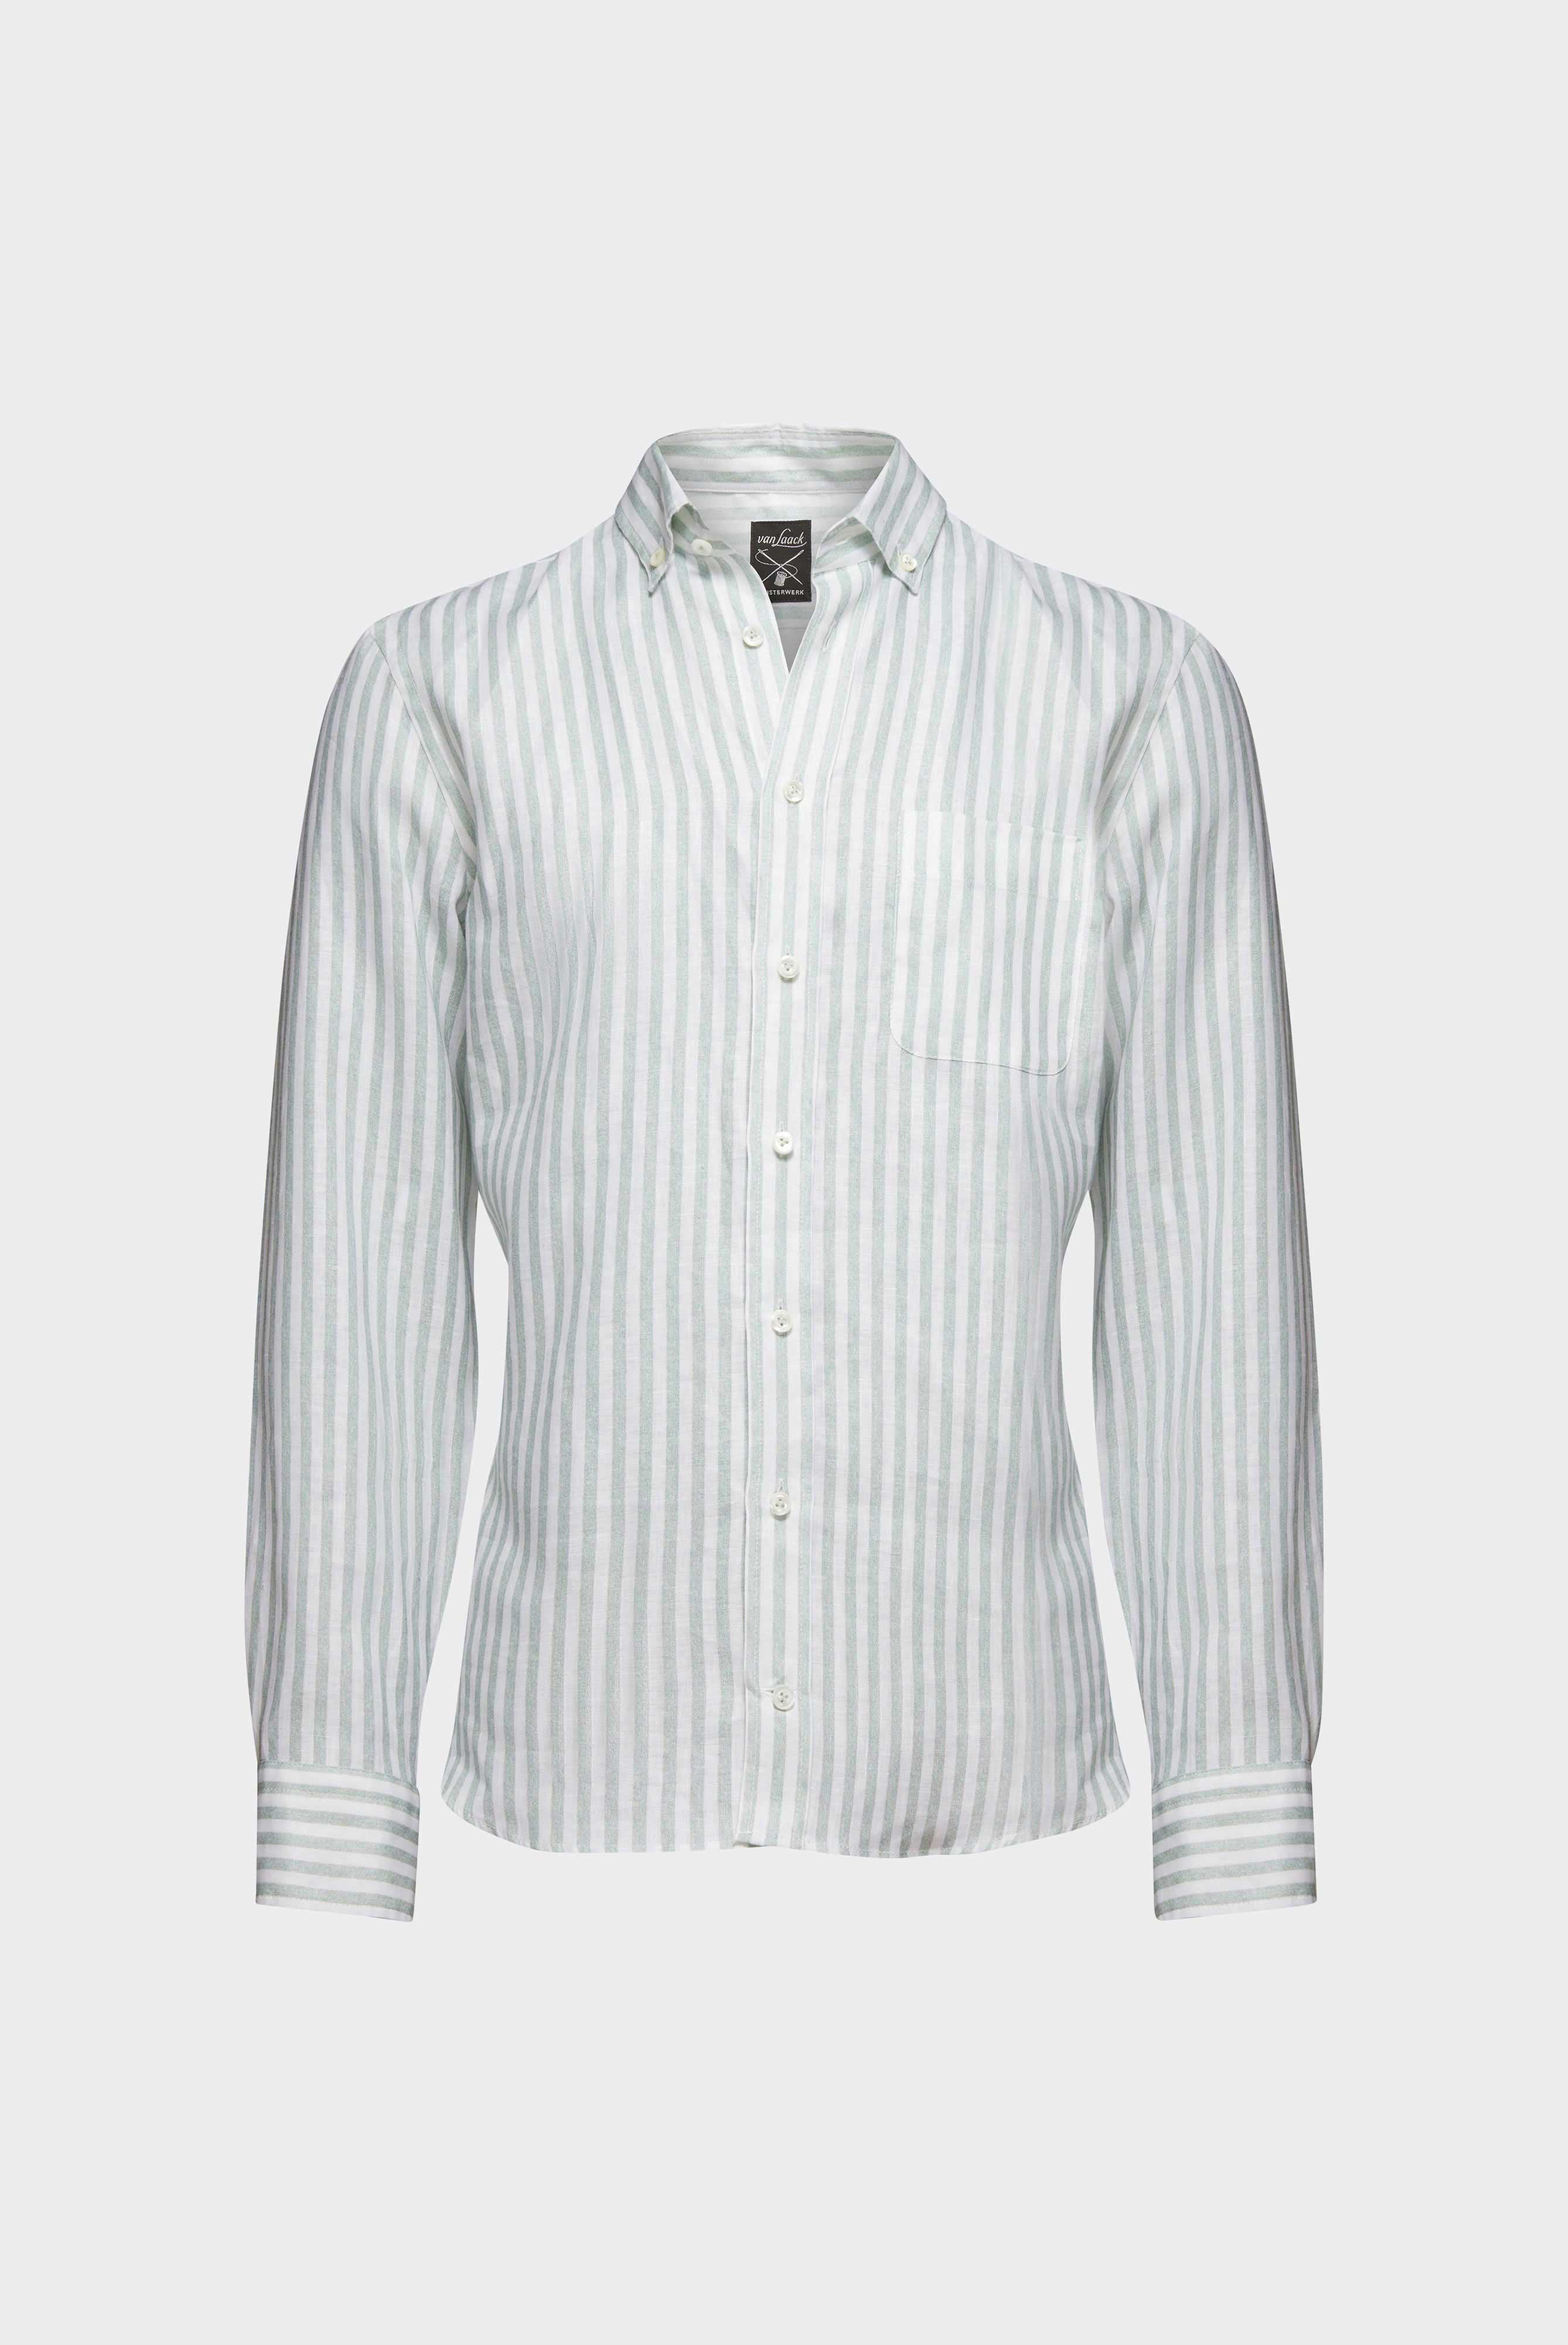 Casual Shirts+Linen Stripe Print Shirt Tailor Fit+20.2013.9V.170352.940.42